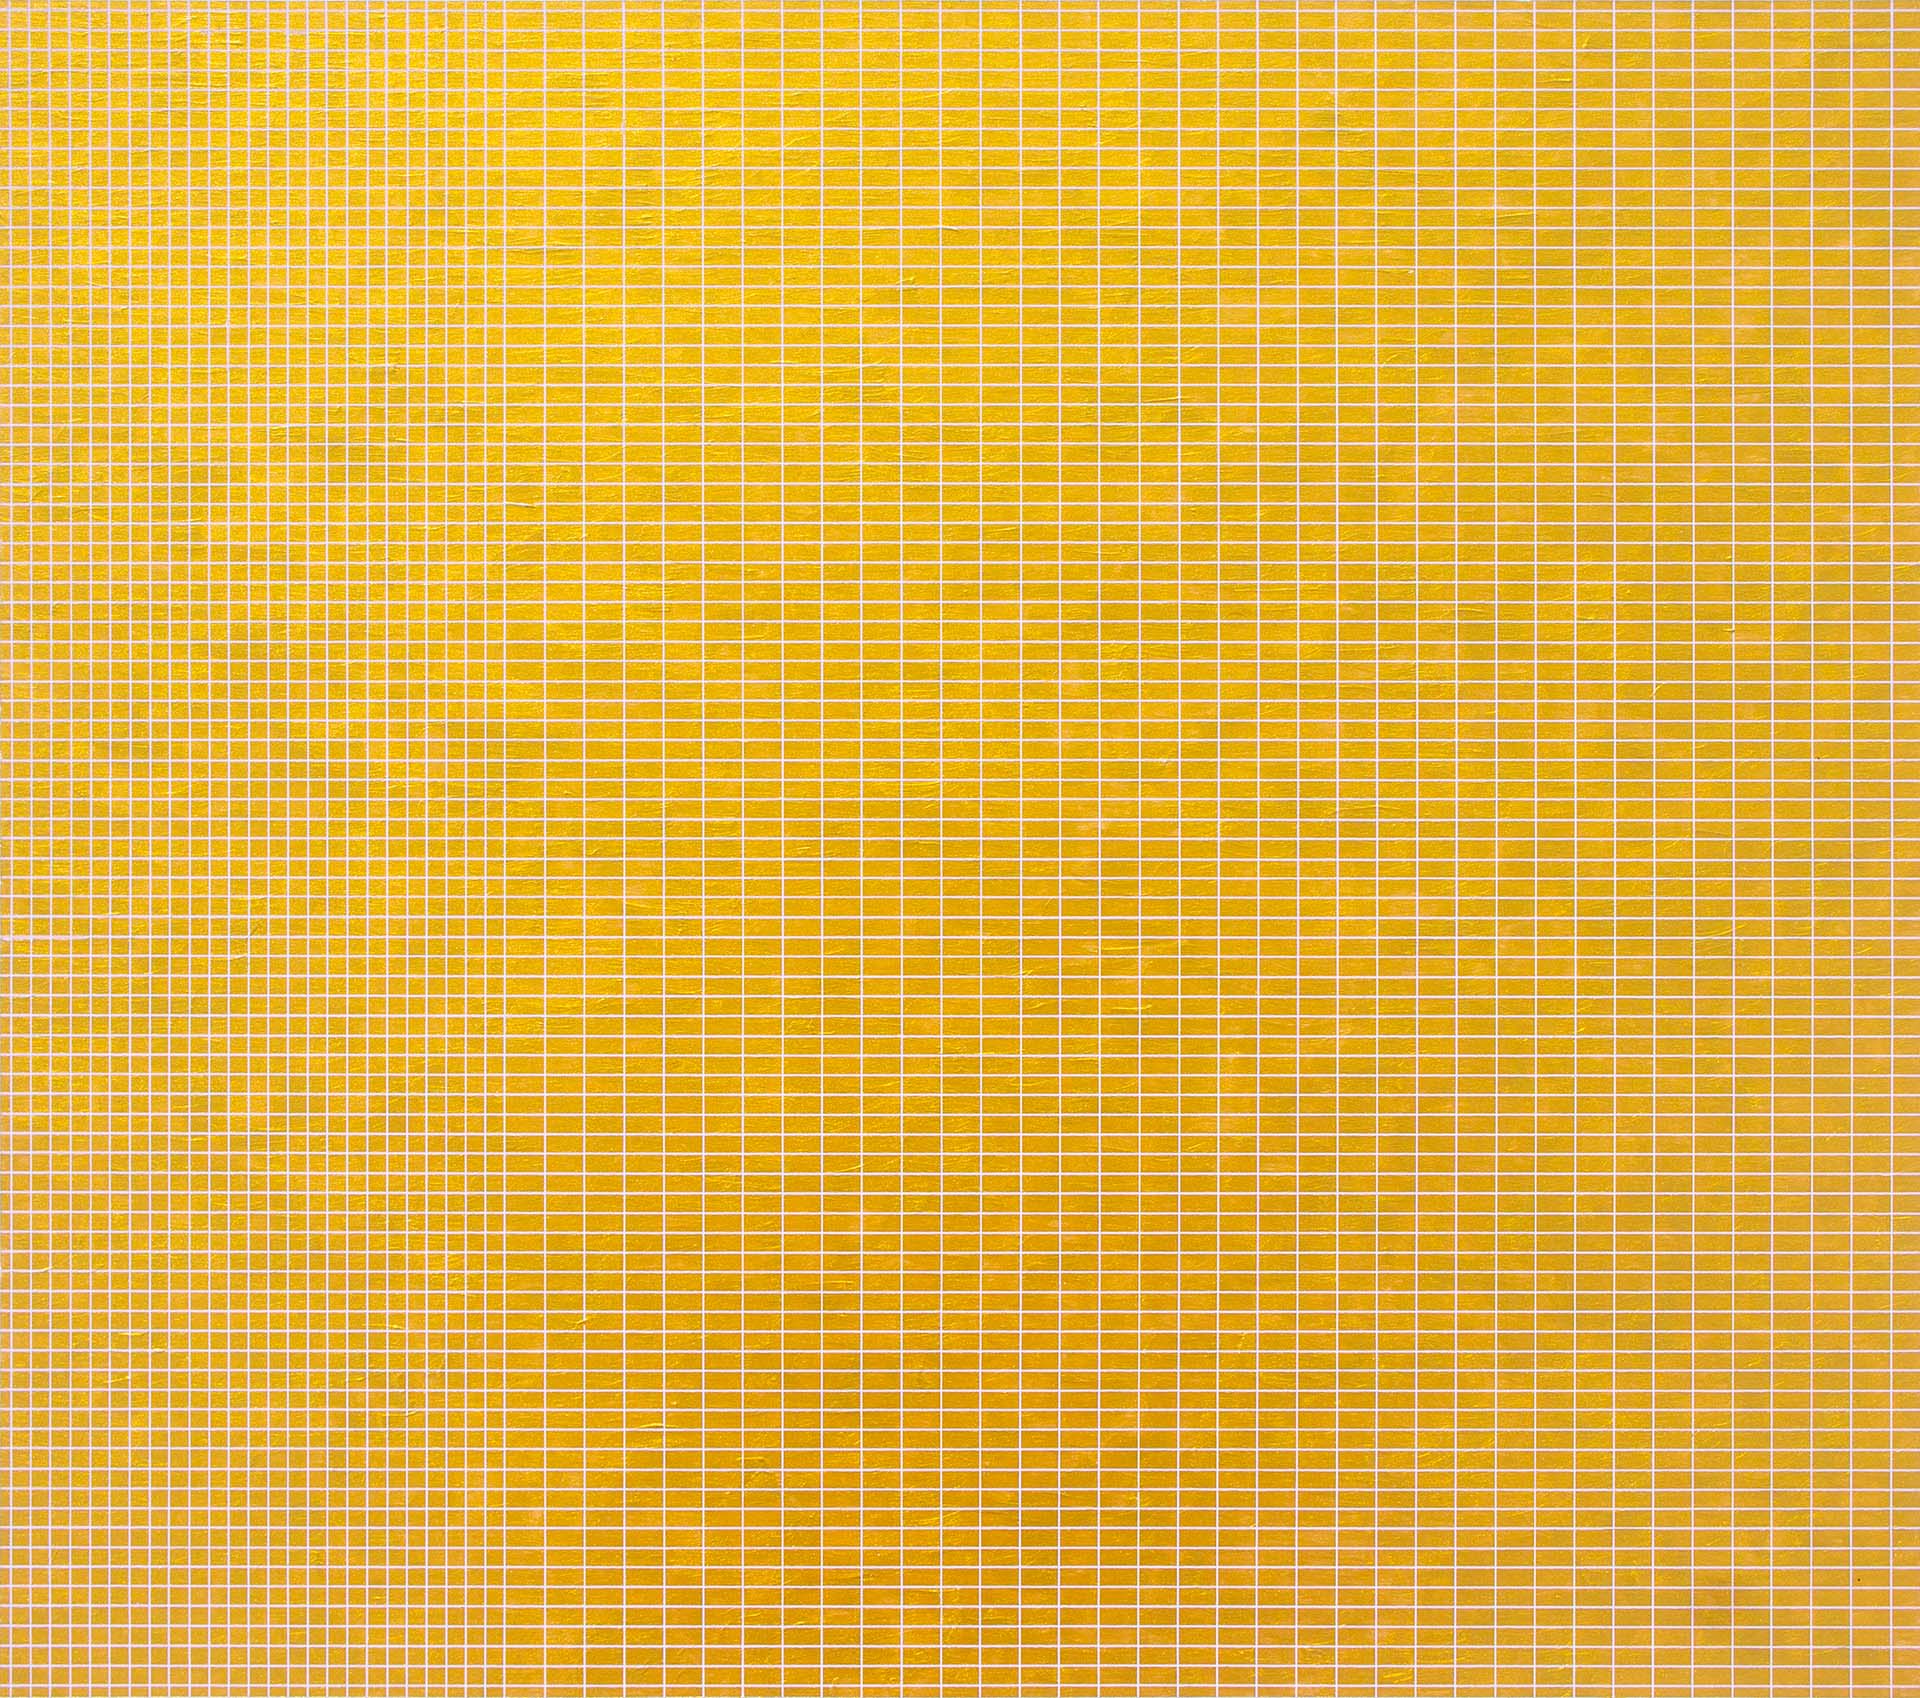 Gold Grid 2, 2018, acrylic on bristol board, 450 x 505mm